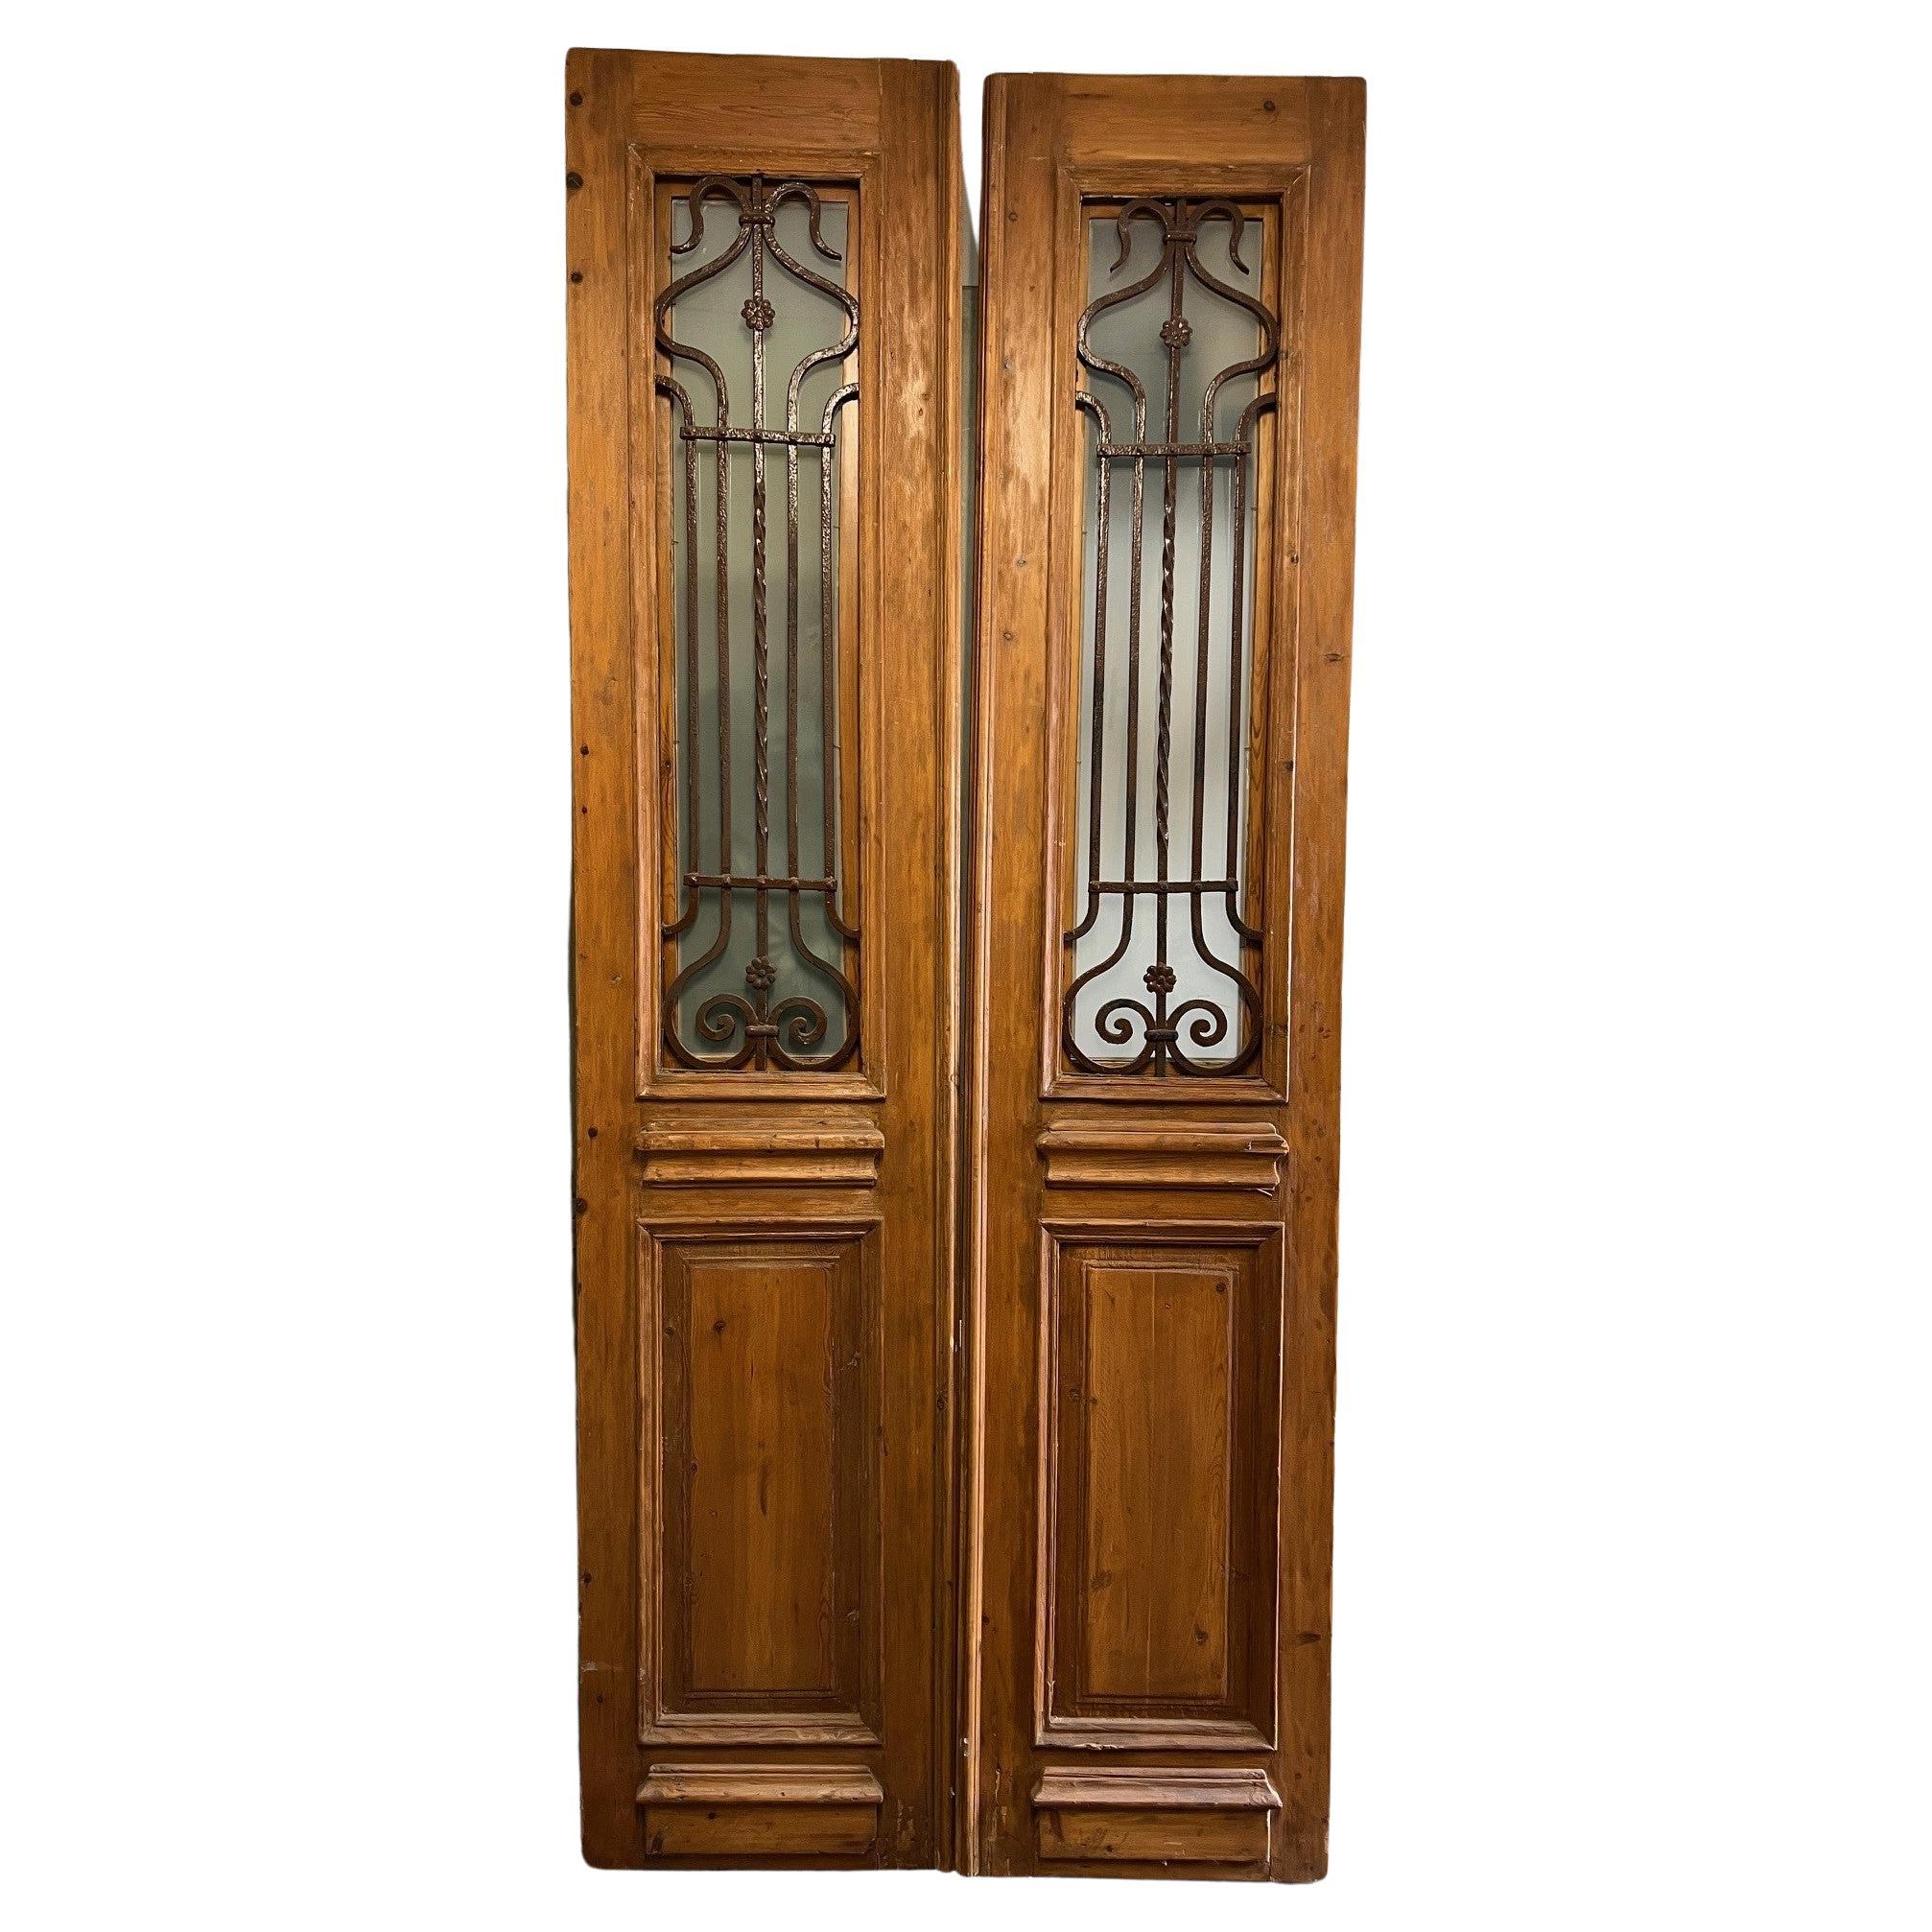 Antique Pair of Doors with Decorative Iron Panels   